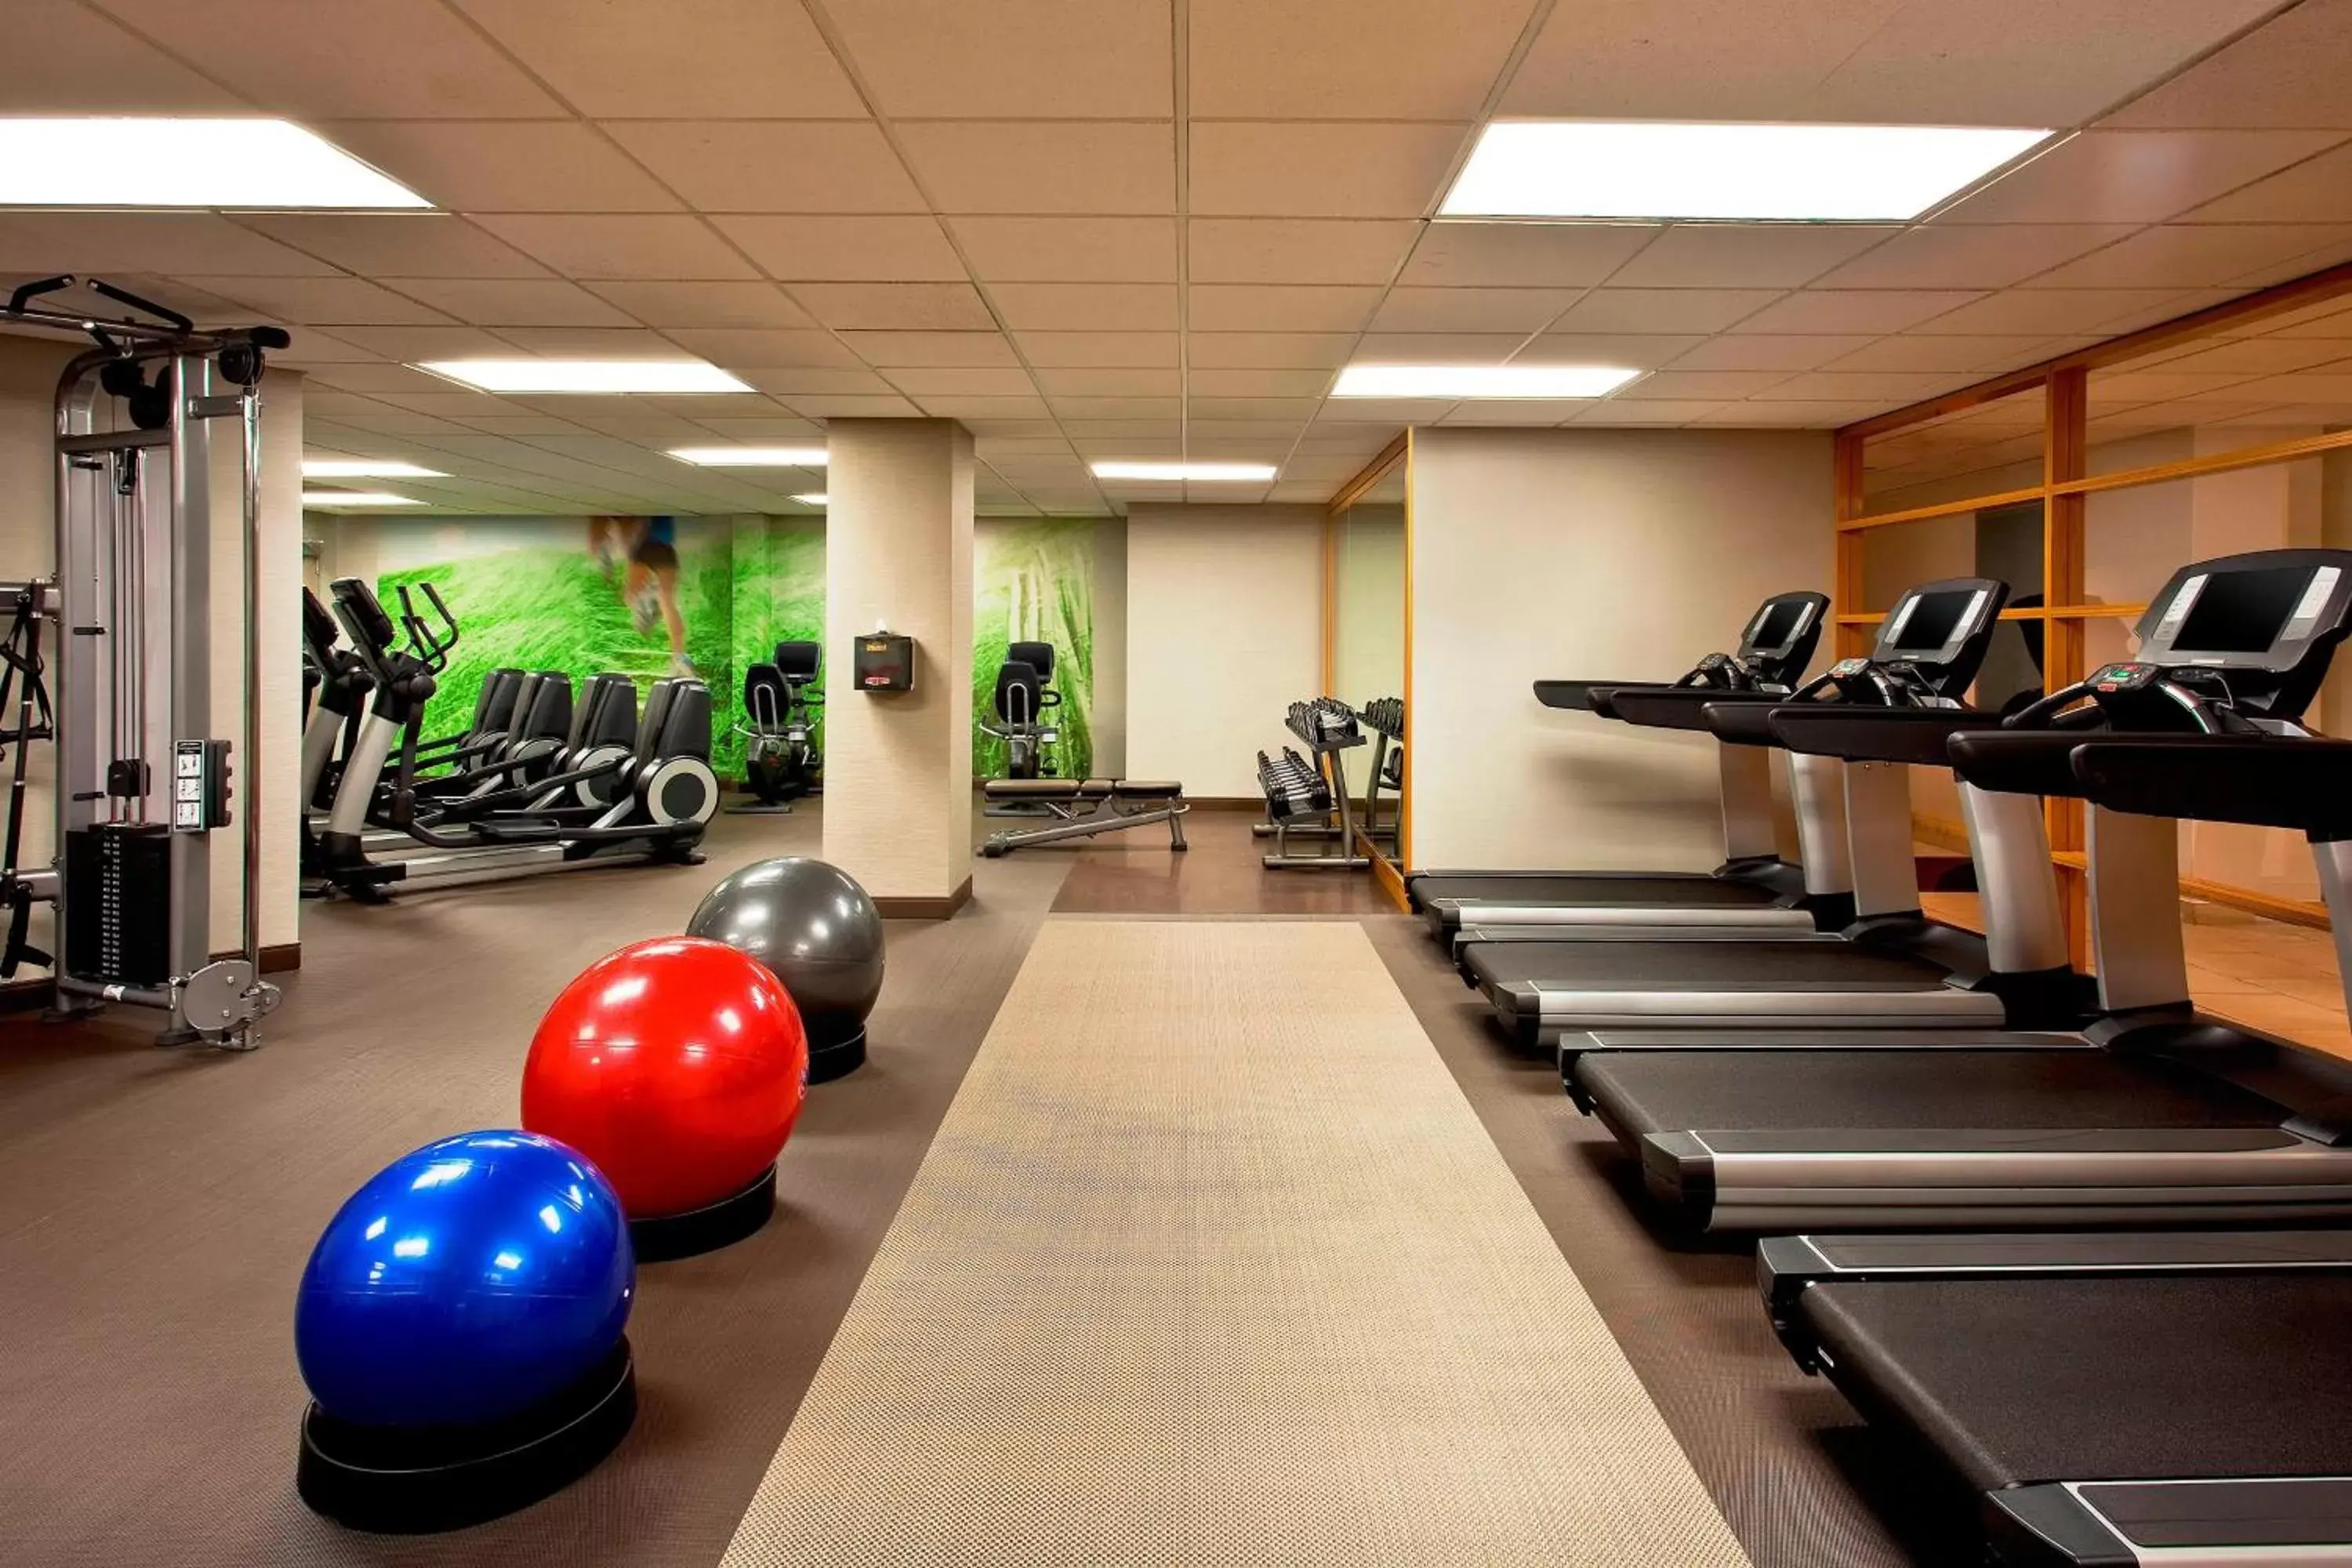 Fitness centre/facilities, Fitness Center/Facilities in The Westin Cincinnati